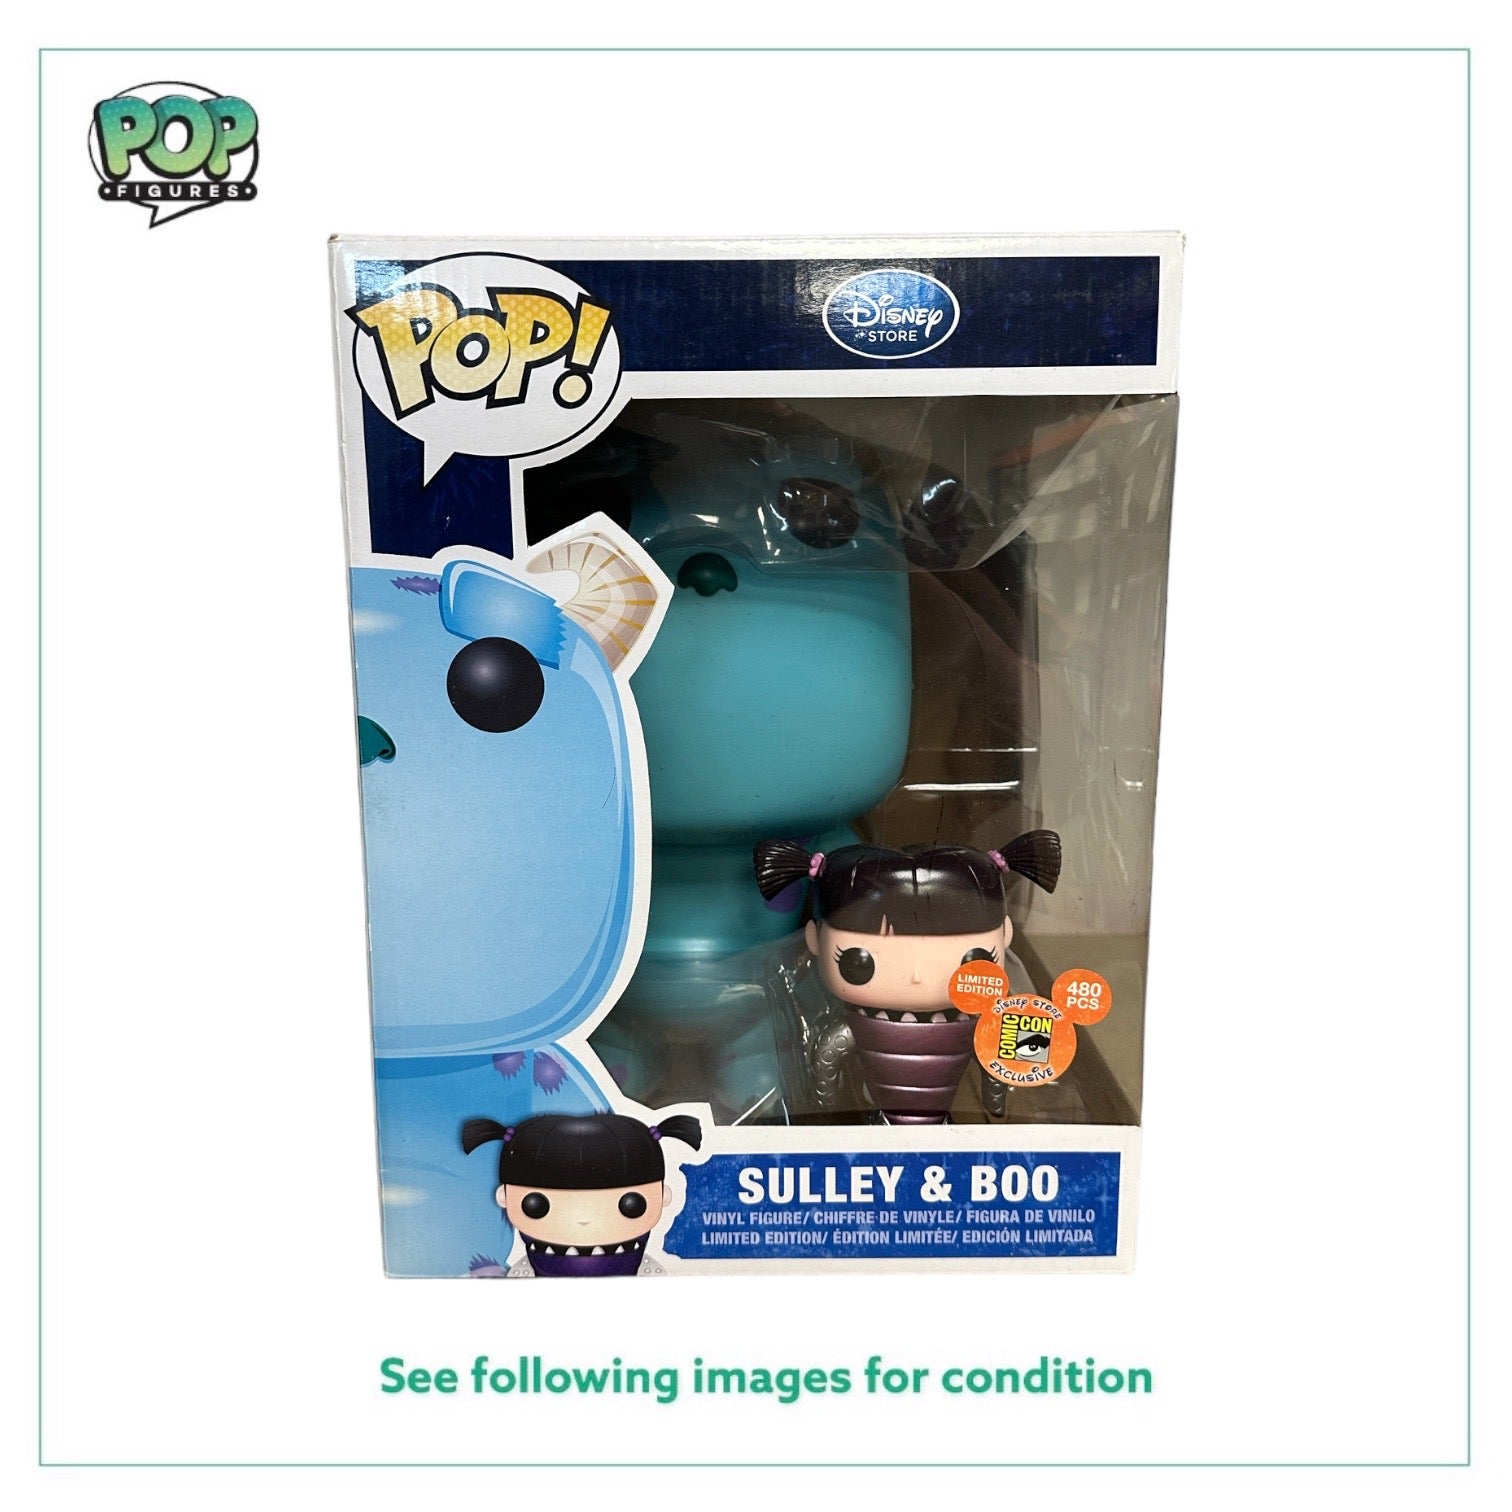 Sulley & Boo (Metallic) 9" Funko Pop! - Disney - SDCC Disney Store 2012 Exclusive LE480 Pcs - Condition 8/10